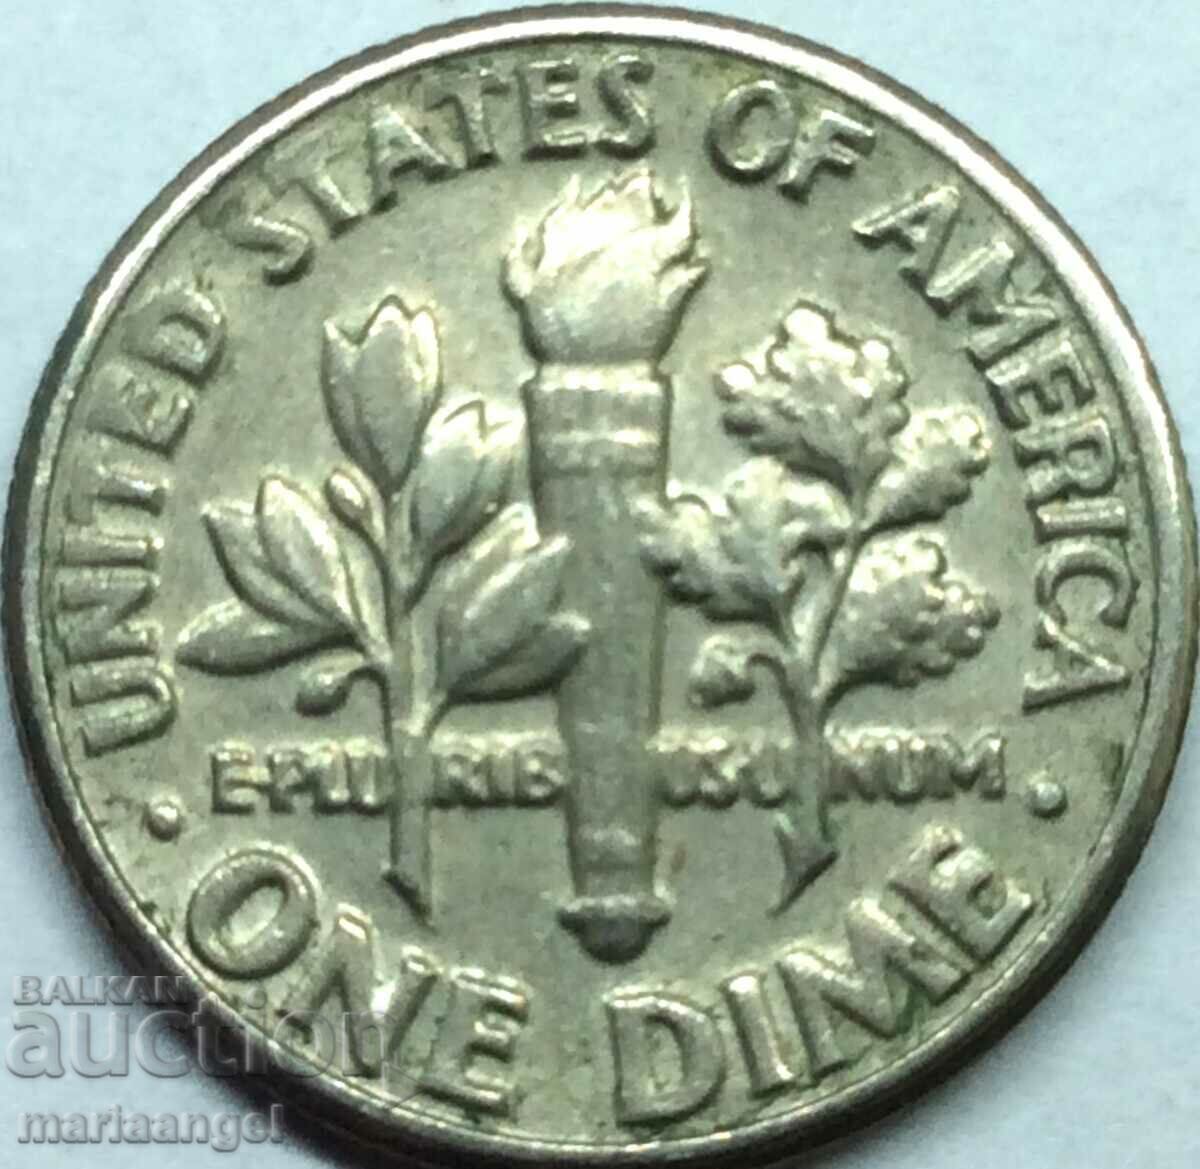 USA 1 dime 1984 10 cents